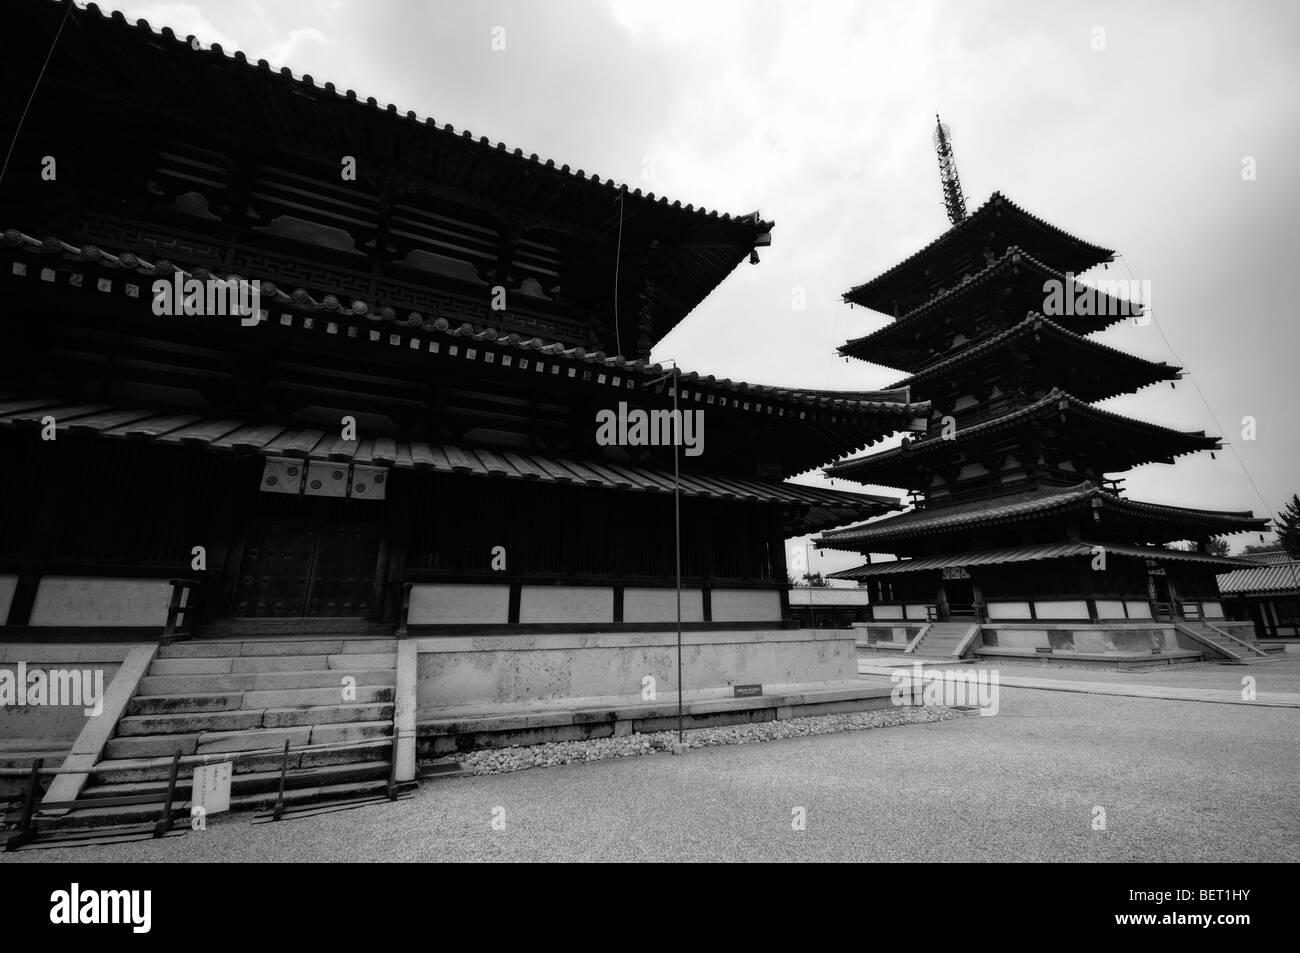 Kondo (left) and the five-story pagoda (right). Sai-in area. Horyu-ji complex. Ikaruga. Nara Prefecture. Japan Stock Photo